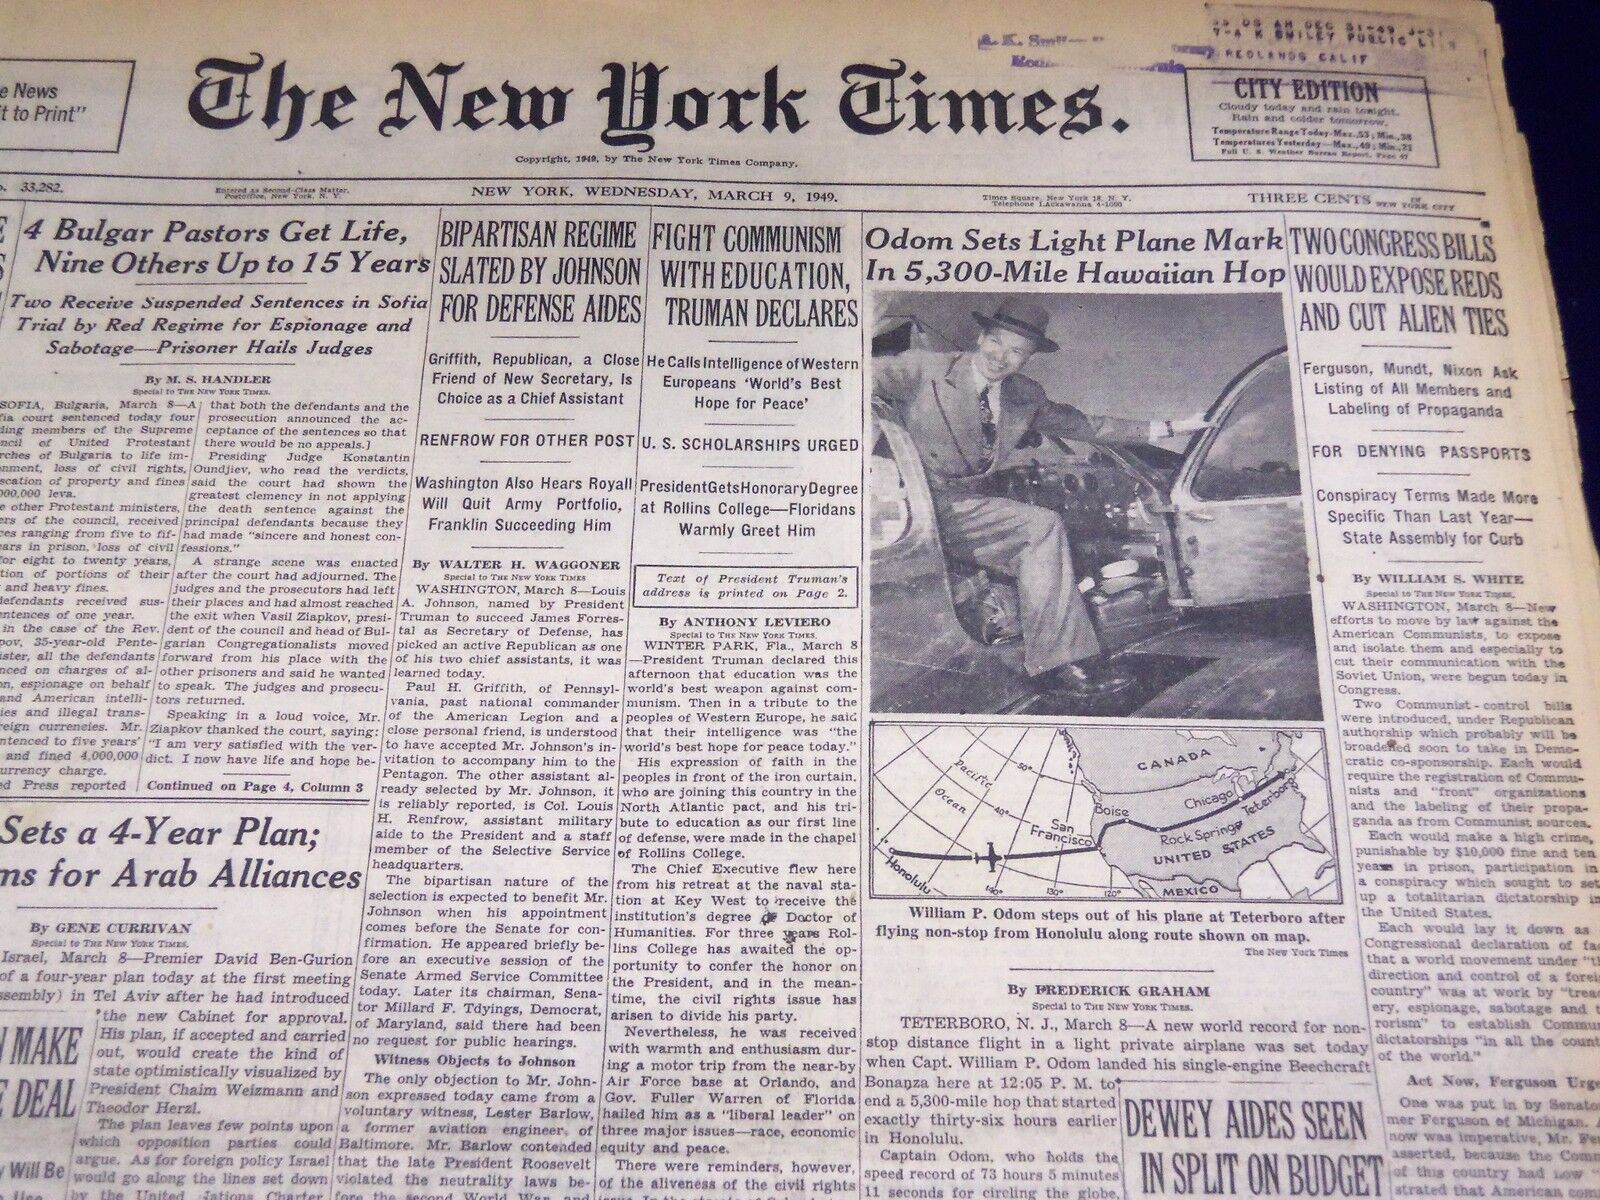 1949 MARCH 9 NEW YORK TIMES - ODOM 5,300 MILE HAWAIIAN HOP - NT 3195